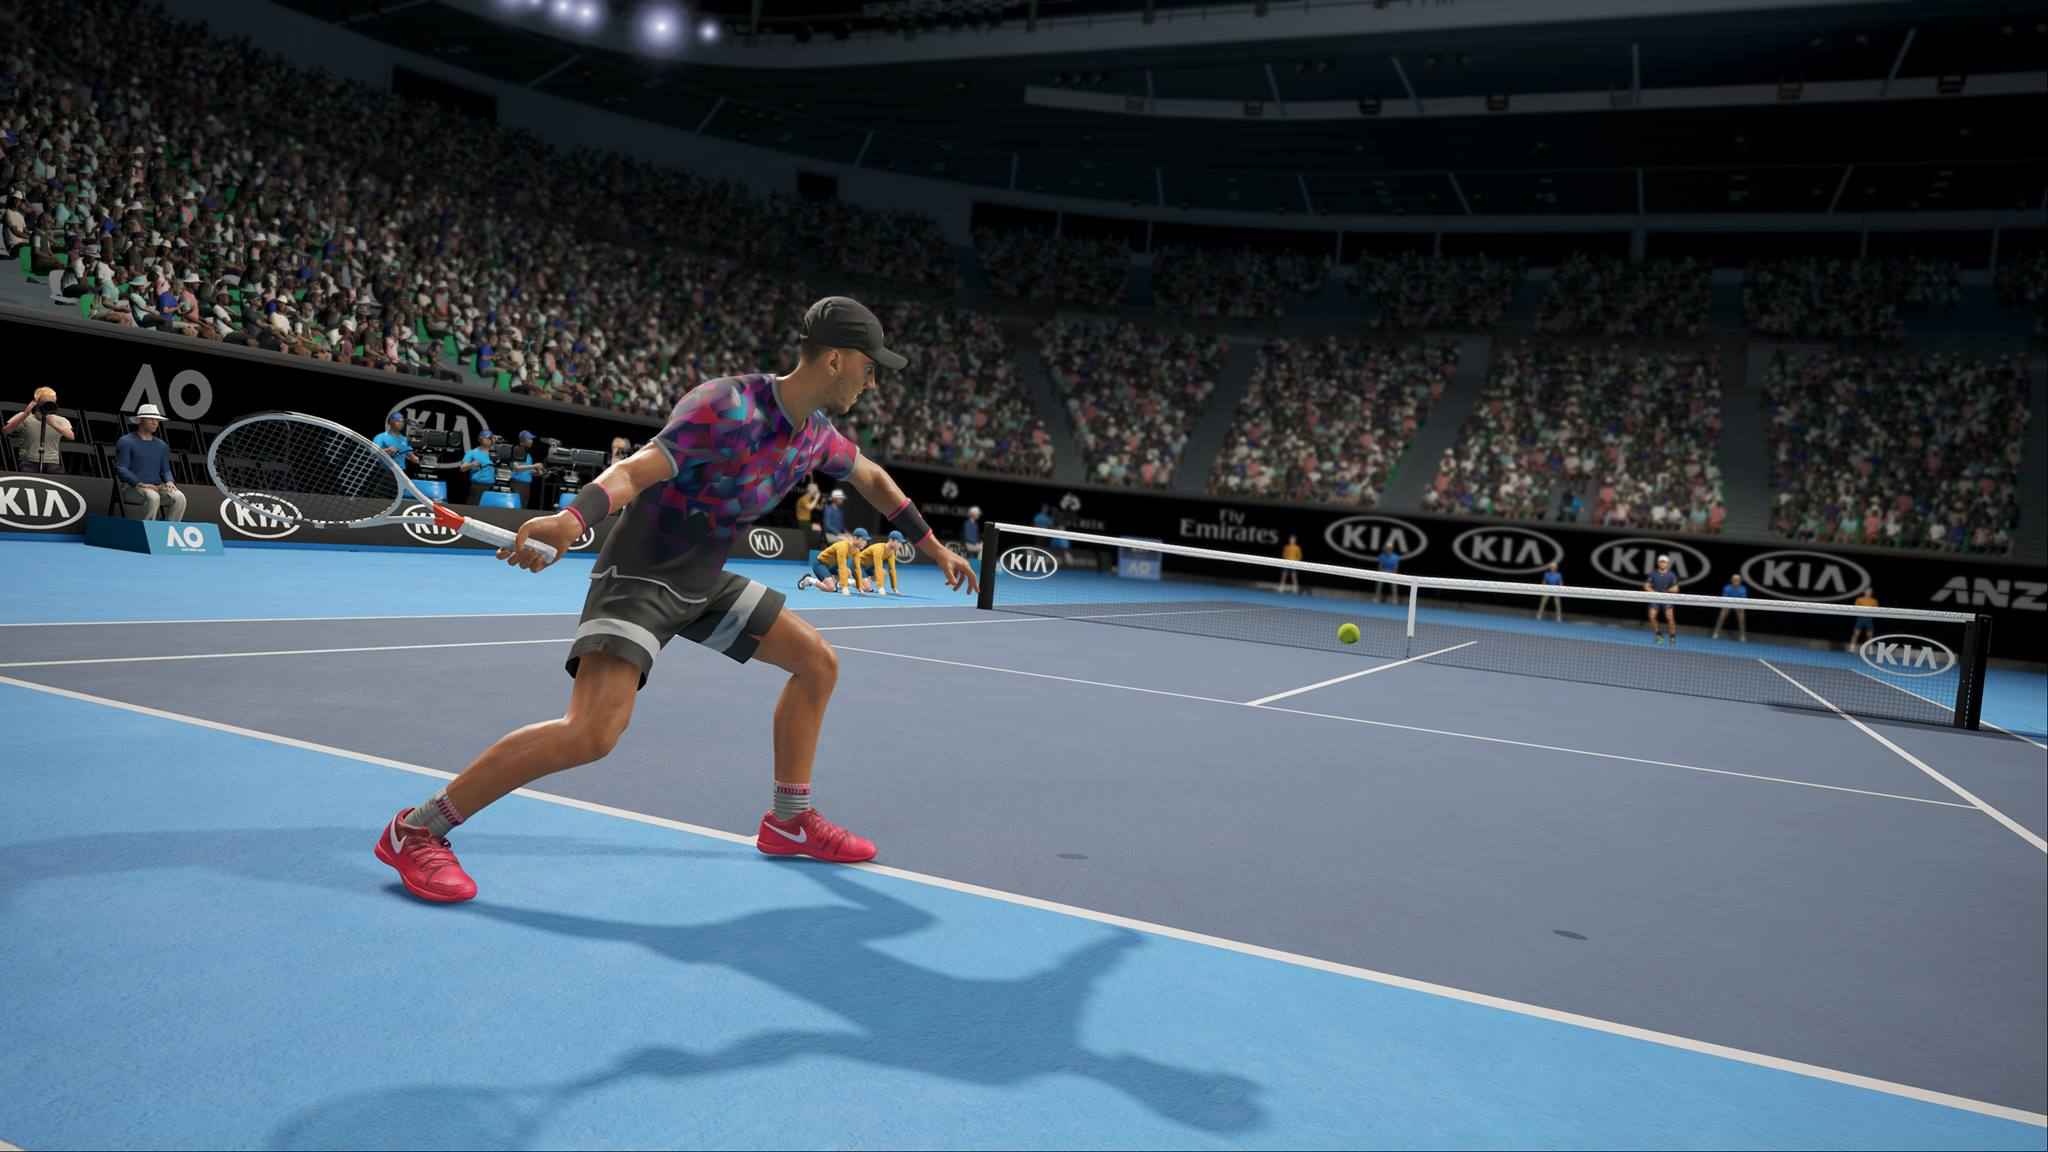 Australian Open 2020 official game AO Tennis 2 arriving this week